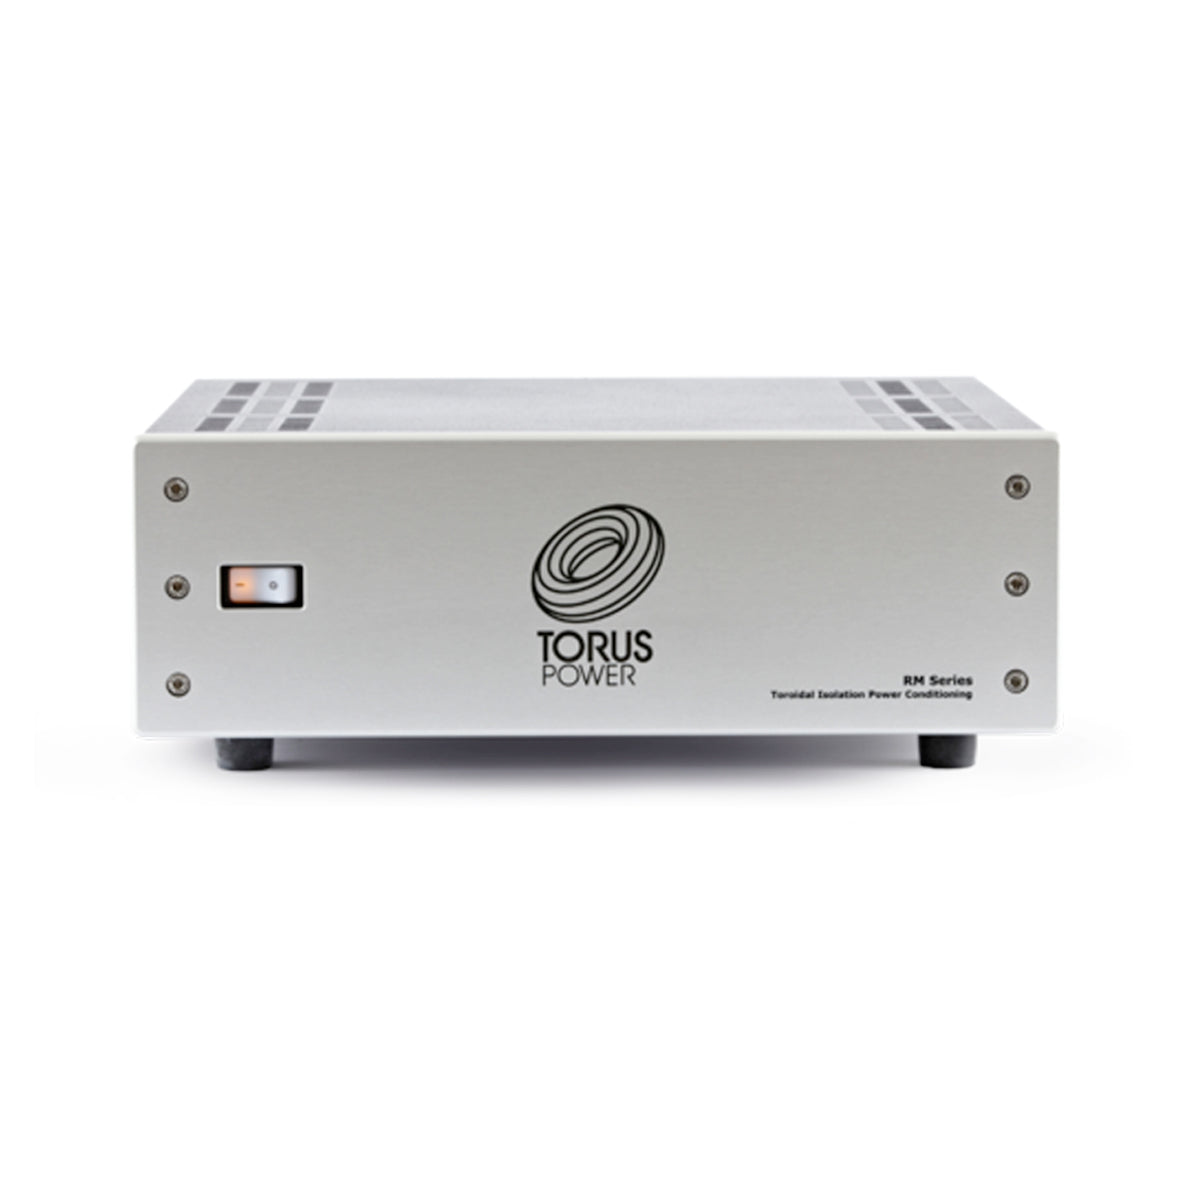 Torus Power RM Series Power Conditioner - The Audio Experts